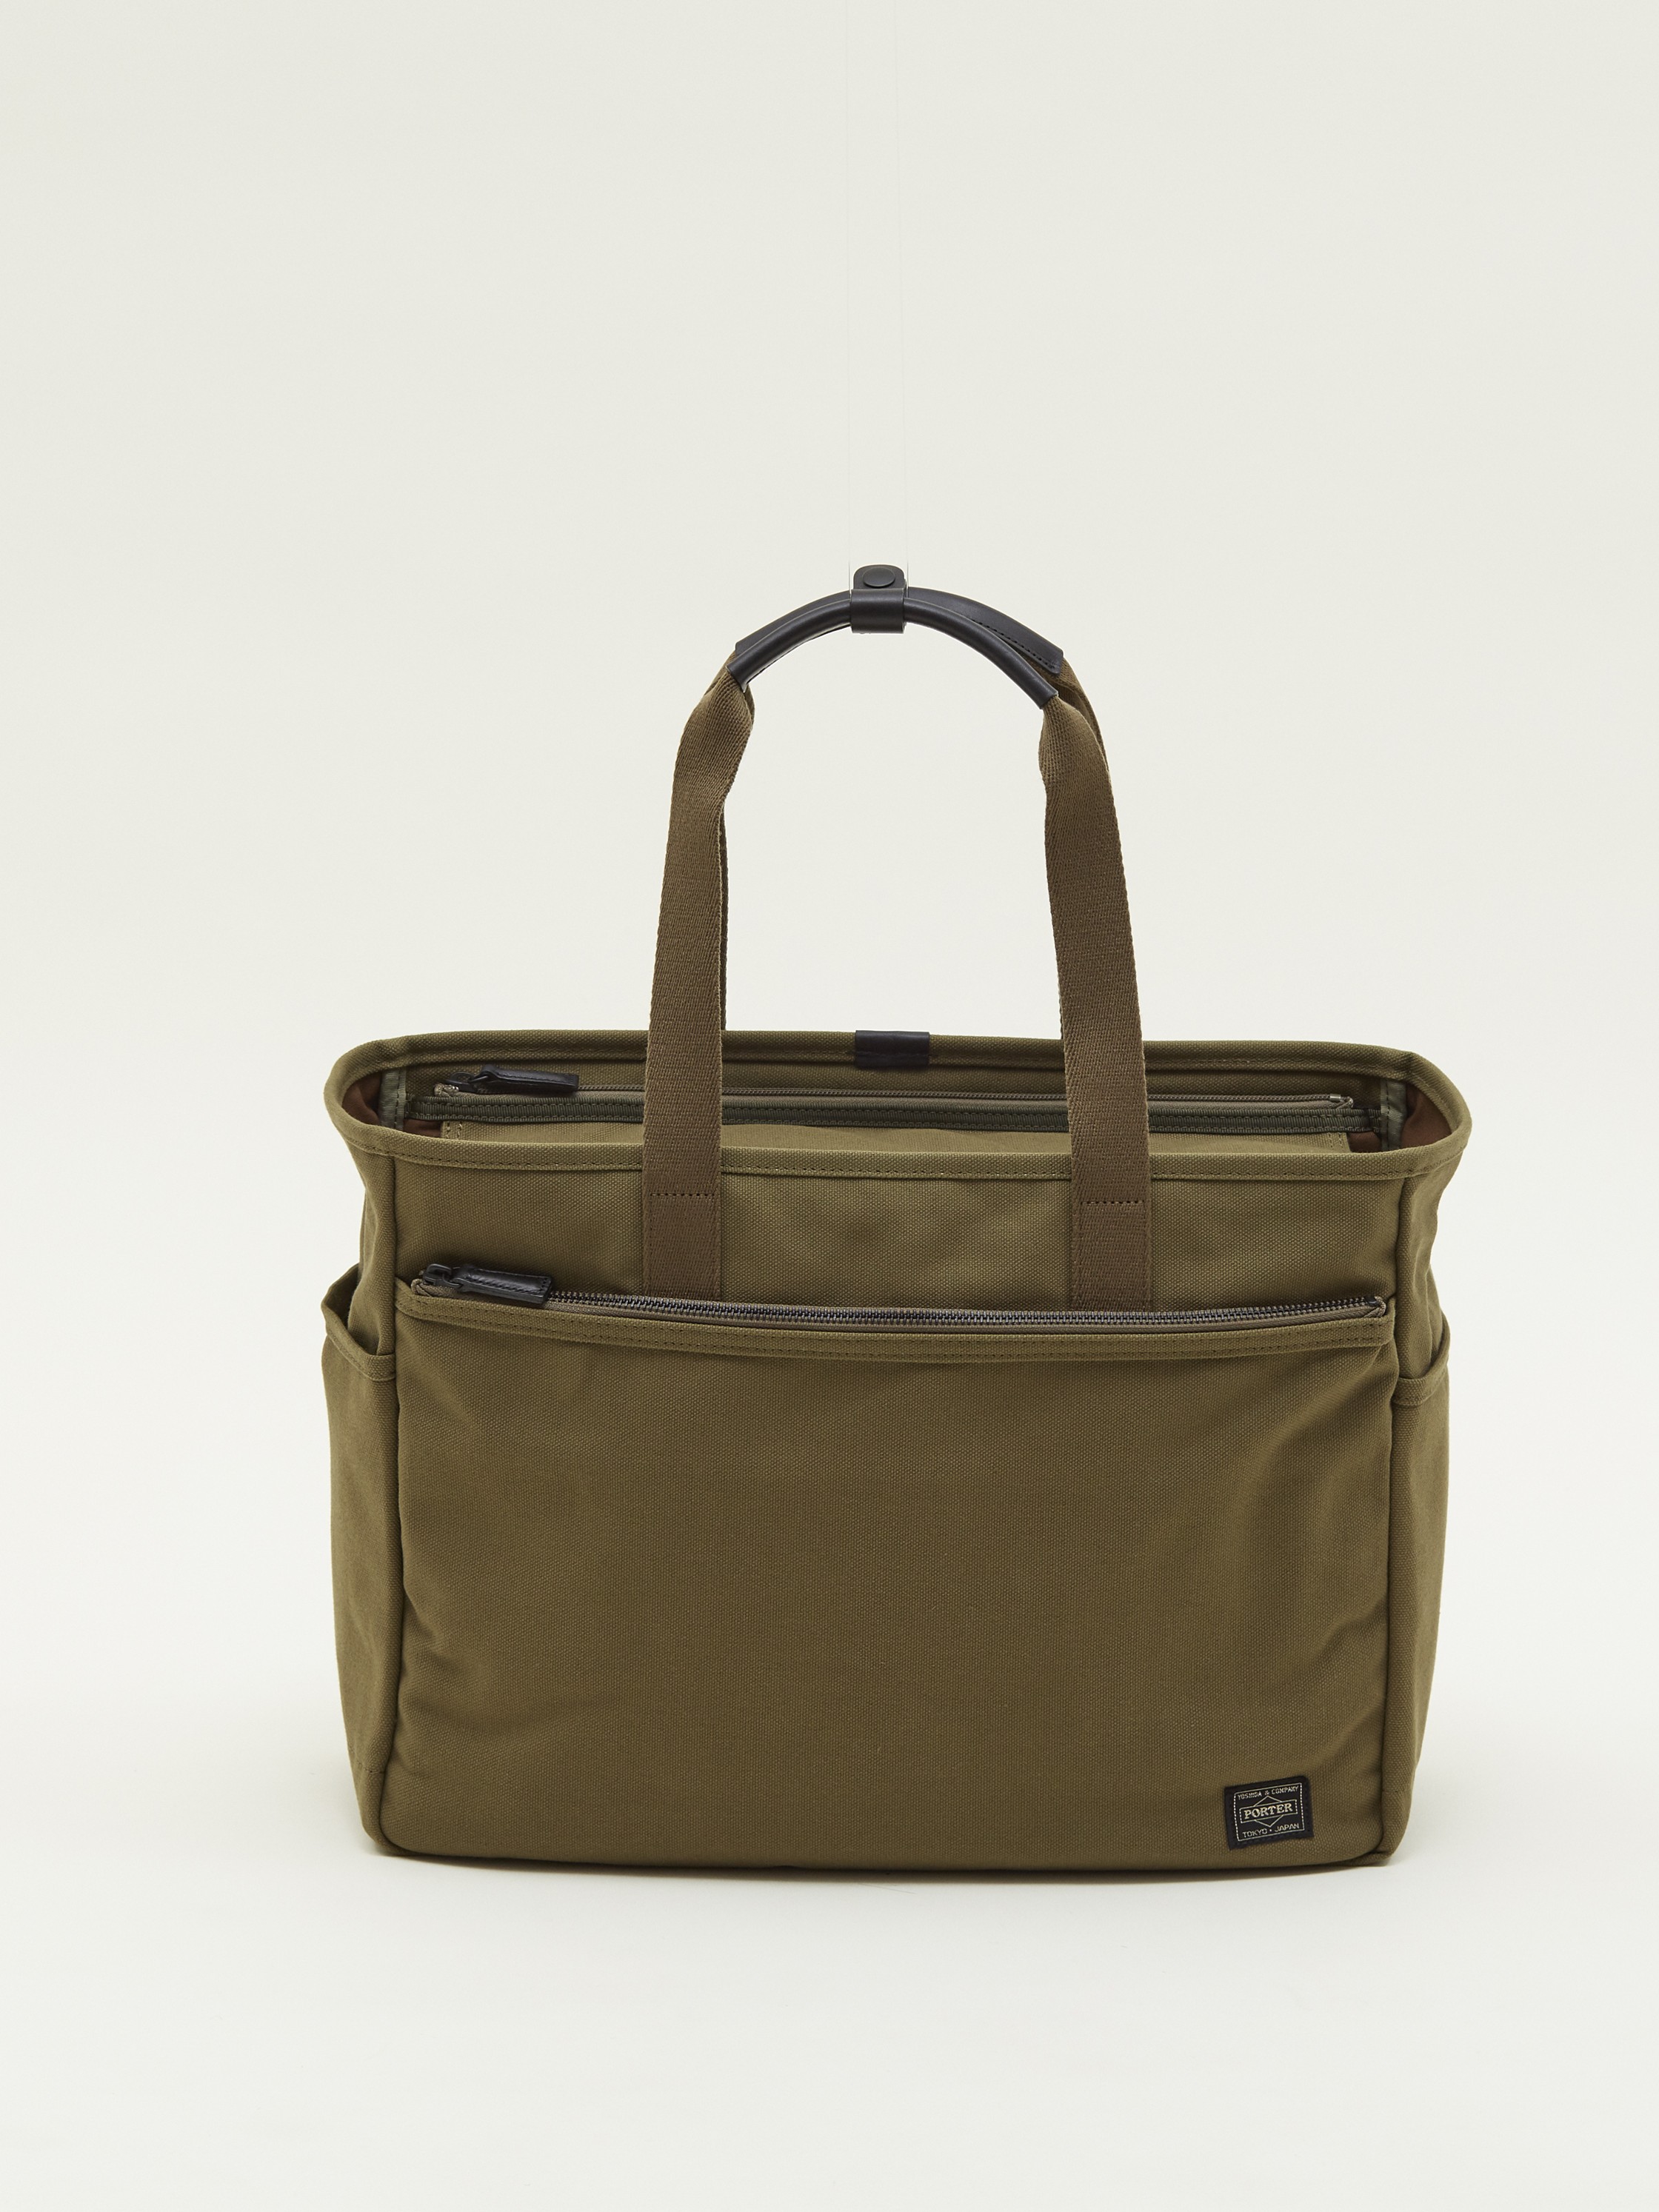 Travel tote - Porter - Bags - Shop | Monocle